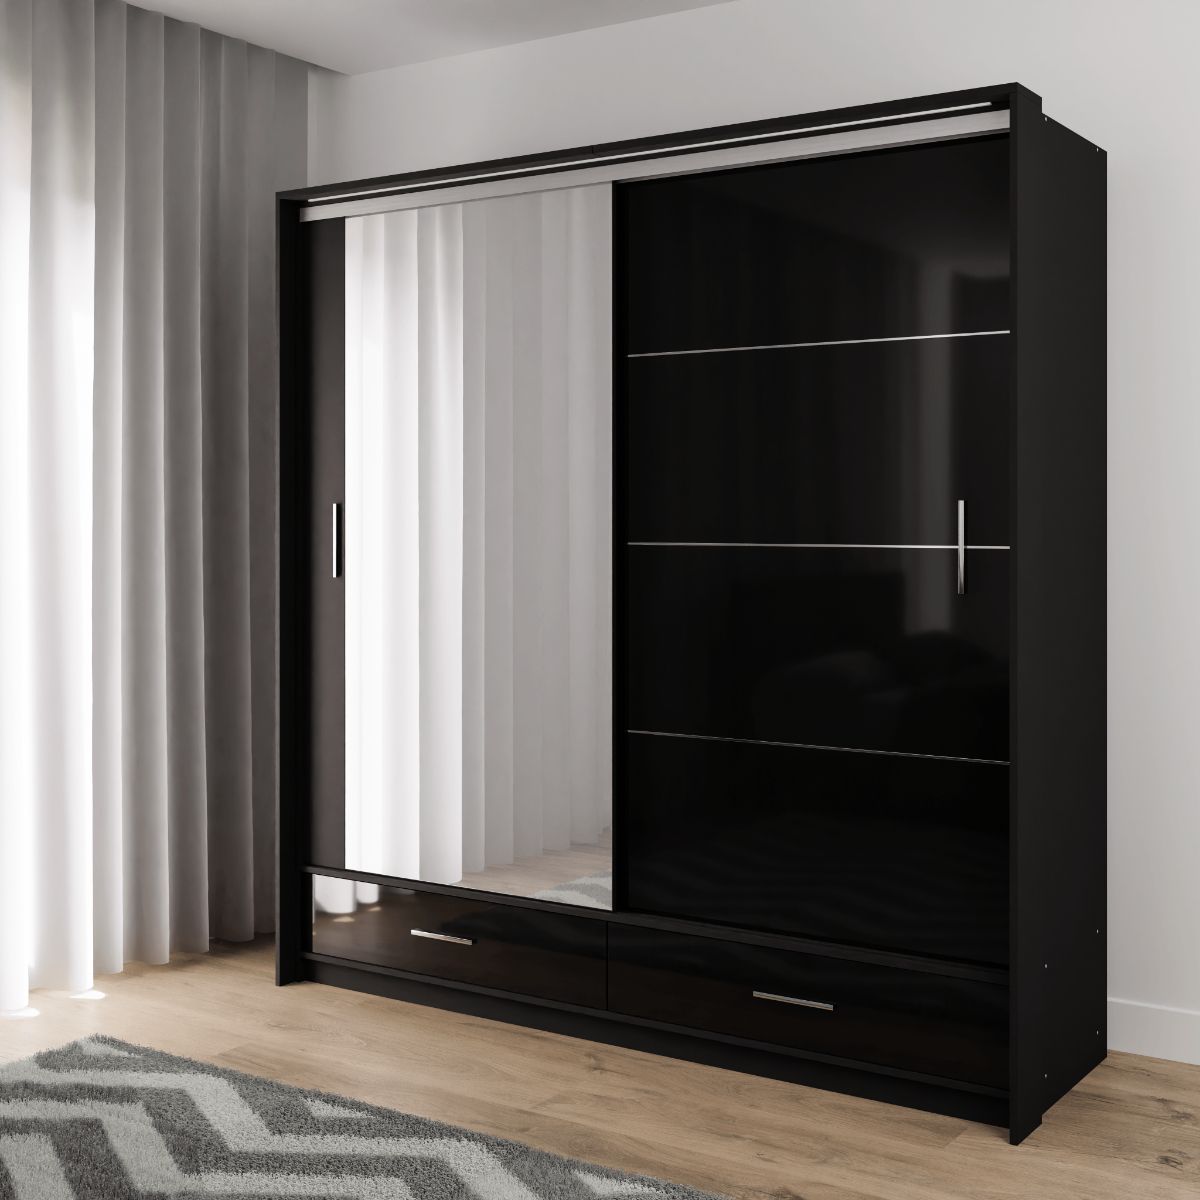 Marsylia 208cm Sliding Door Wardrobe Black | Dako Furniture | Dako Furniture Inside Black Single Door Wardrobes (Gallery 20 of 20)